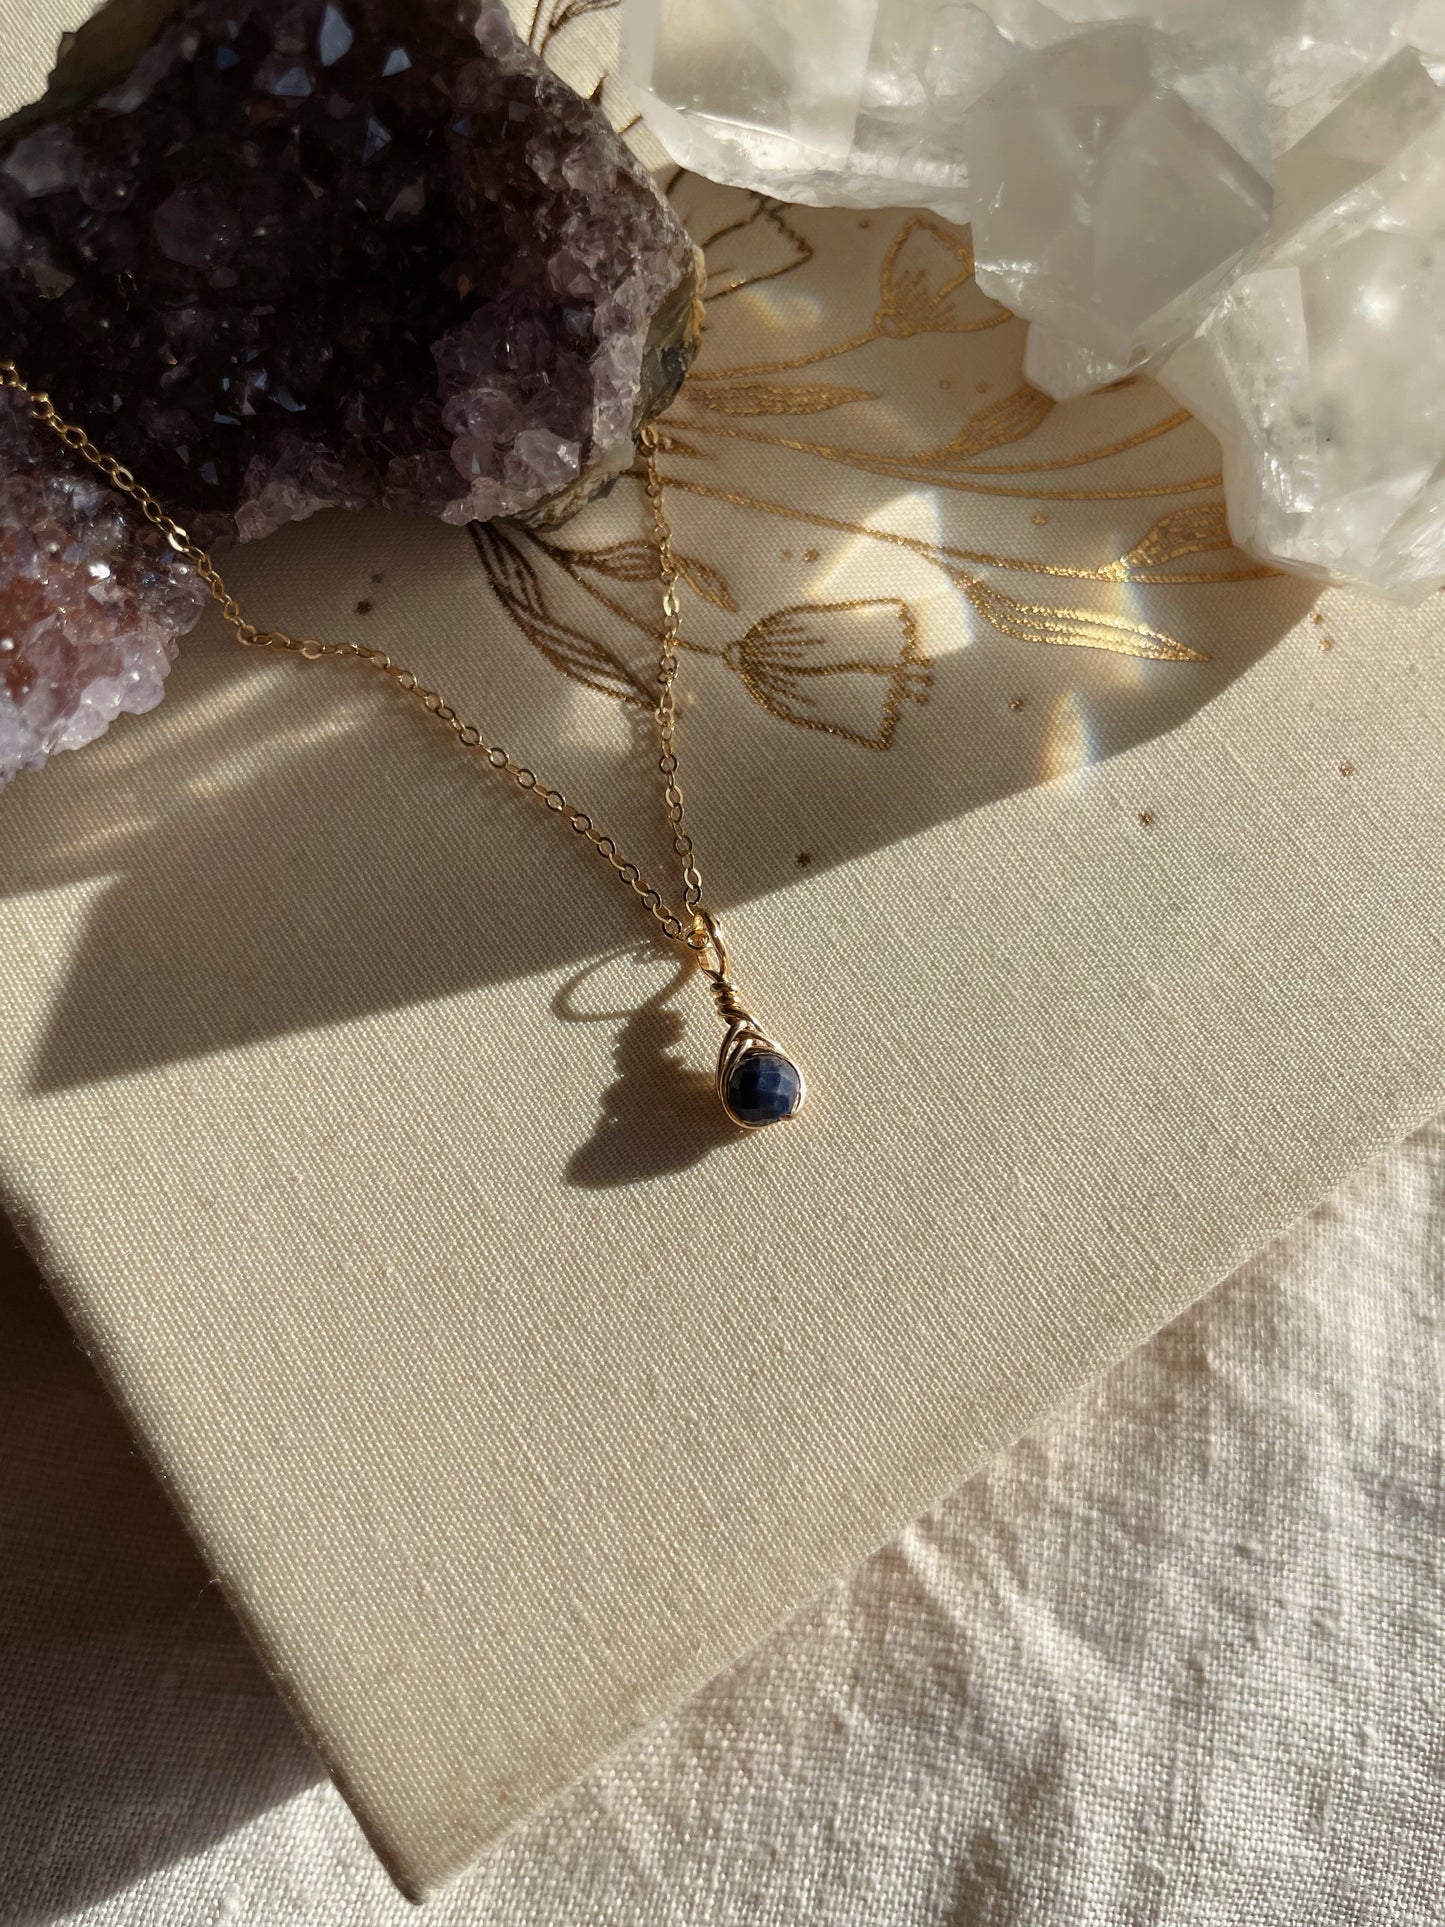 Birthstone Minimal Necklace - Gold Filled